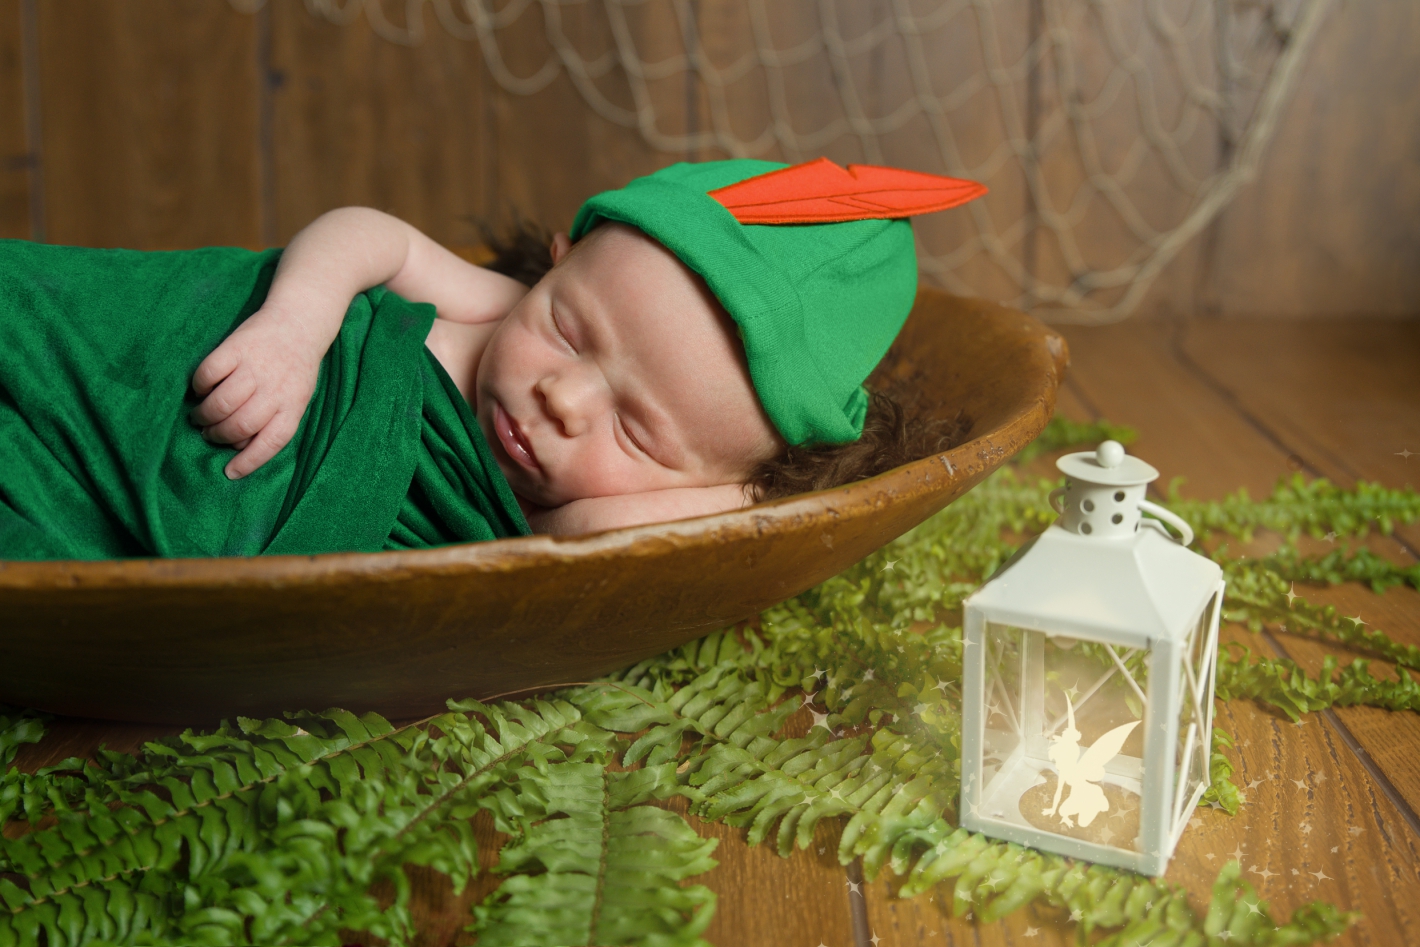 Newborn photos with Peter Pan theme, Tinkerbell in a lantern